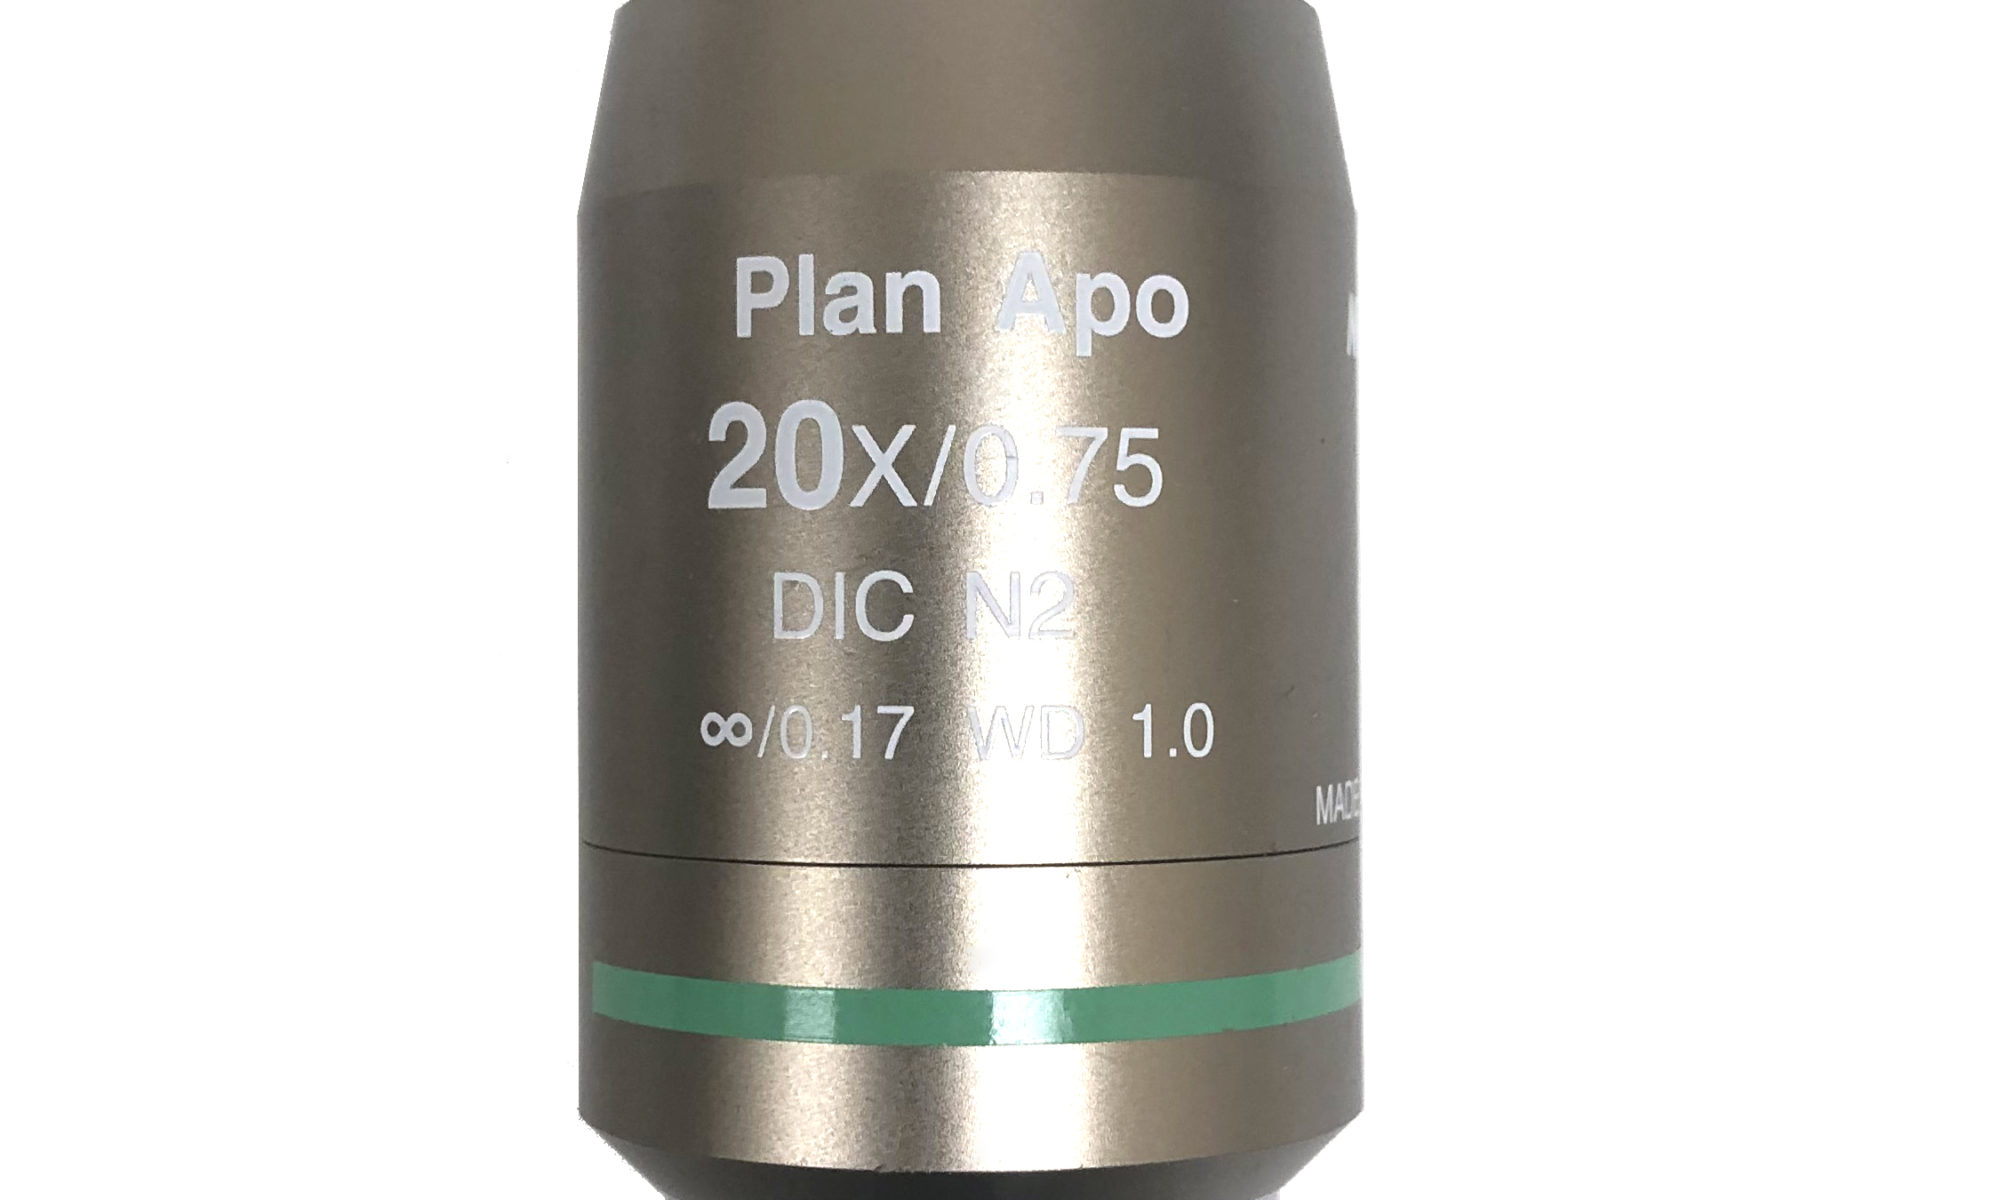 Nikon Objective Plan Apo 20x/0.75 DIC N2 Hero